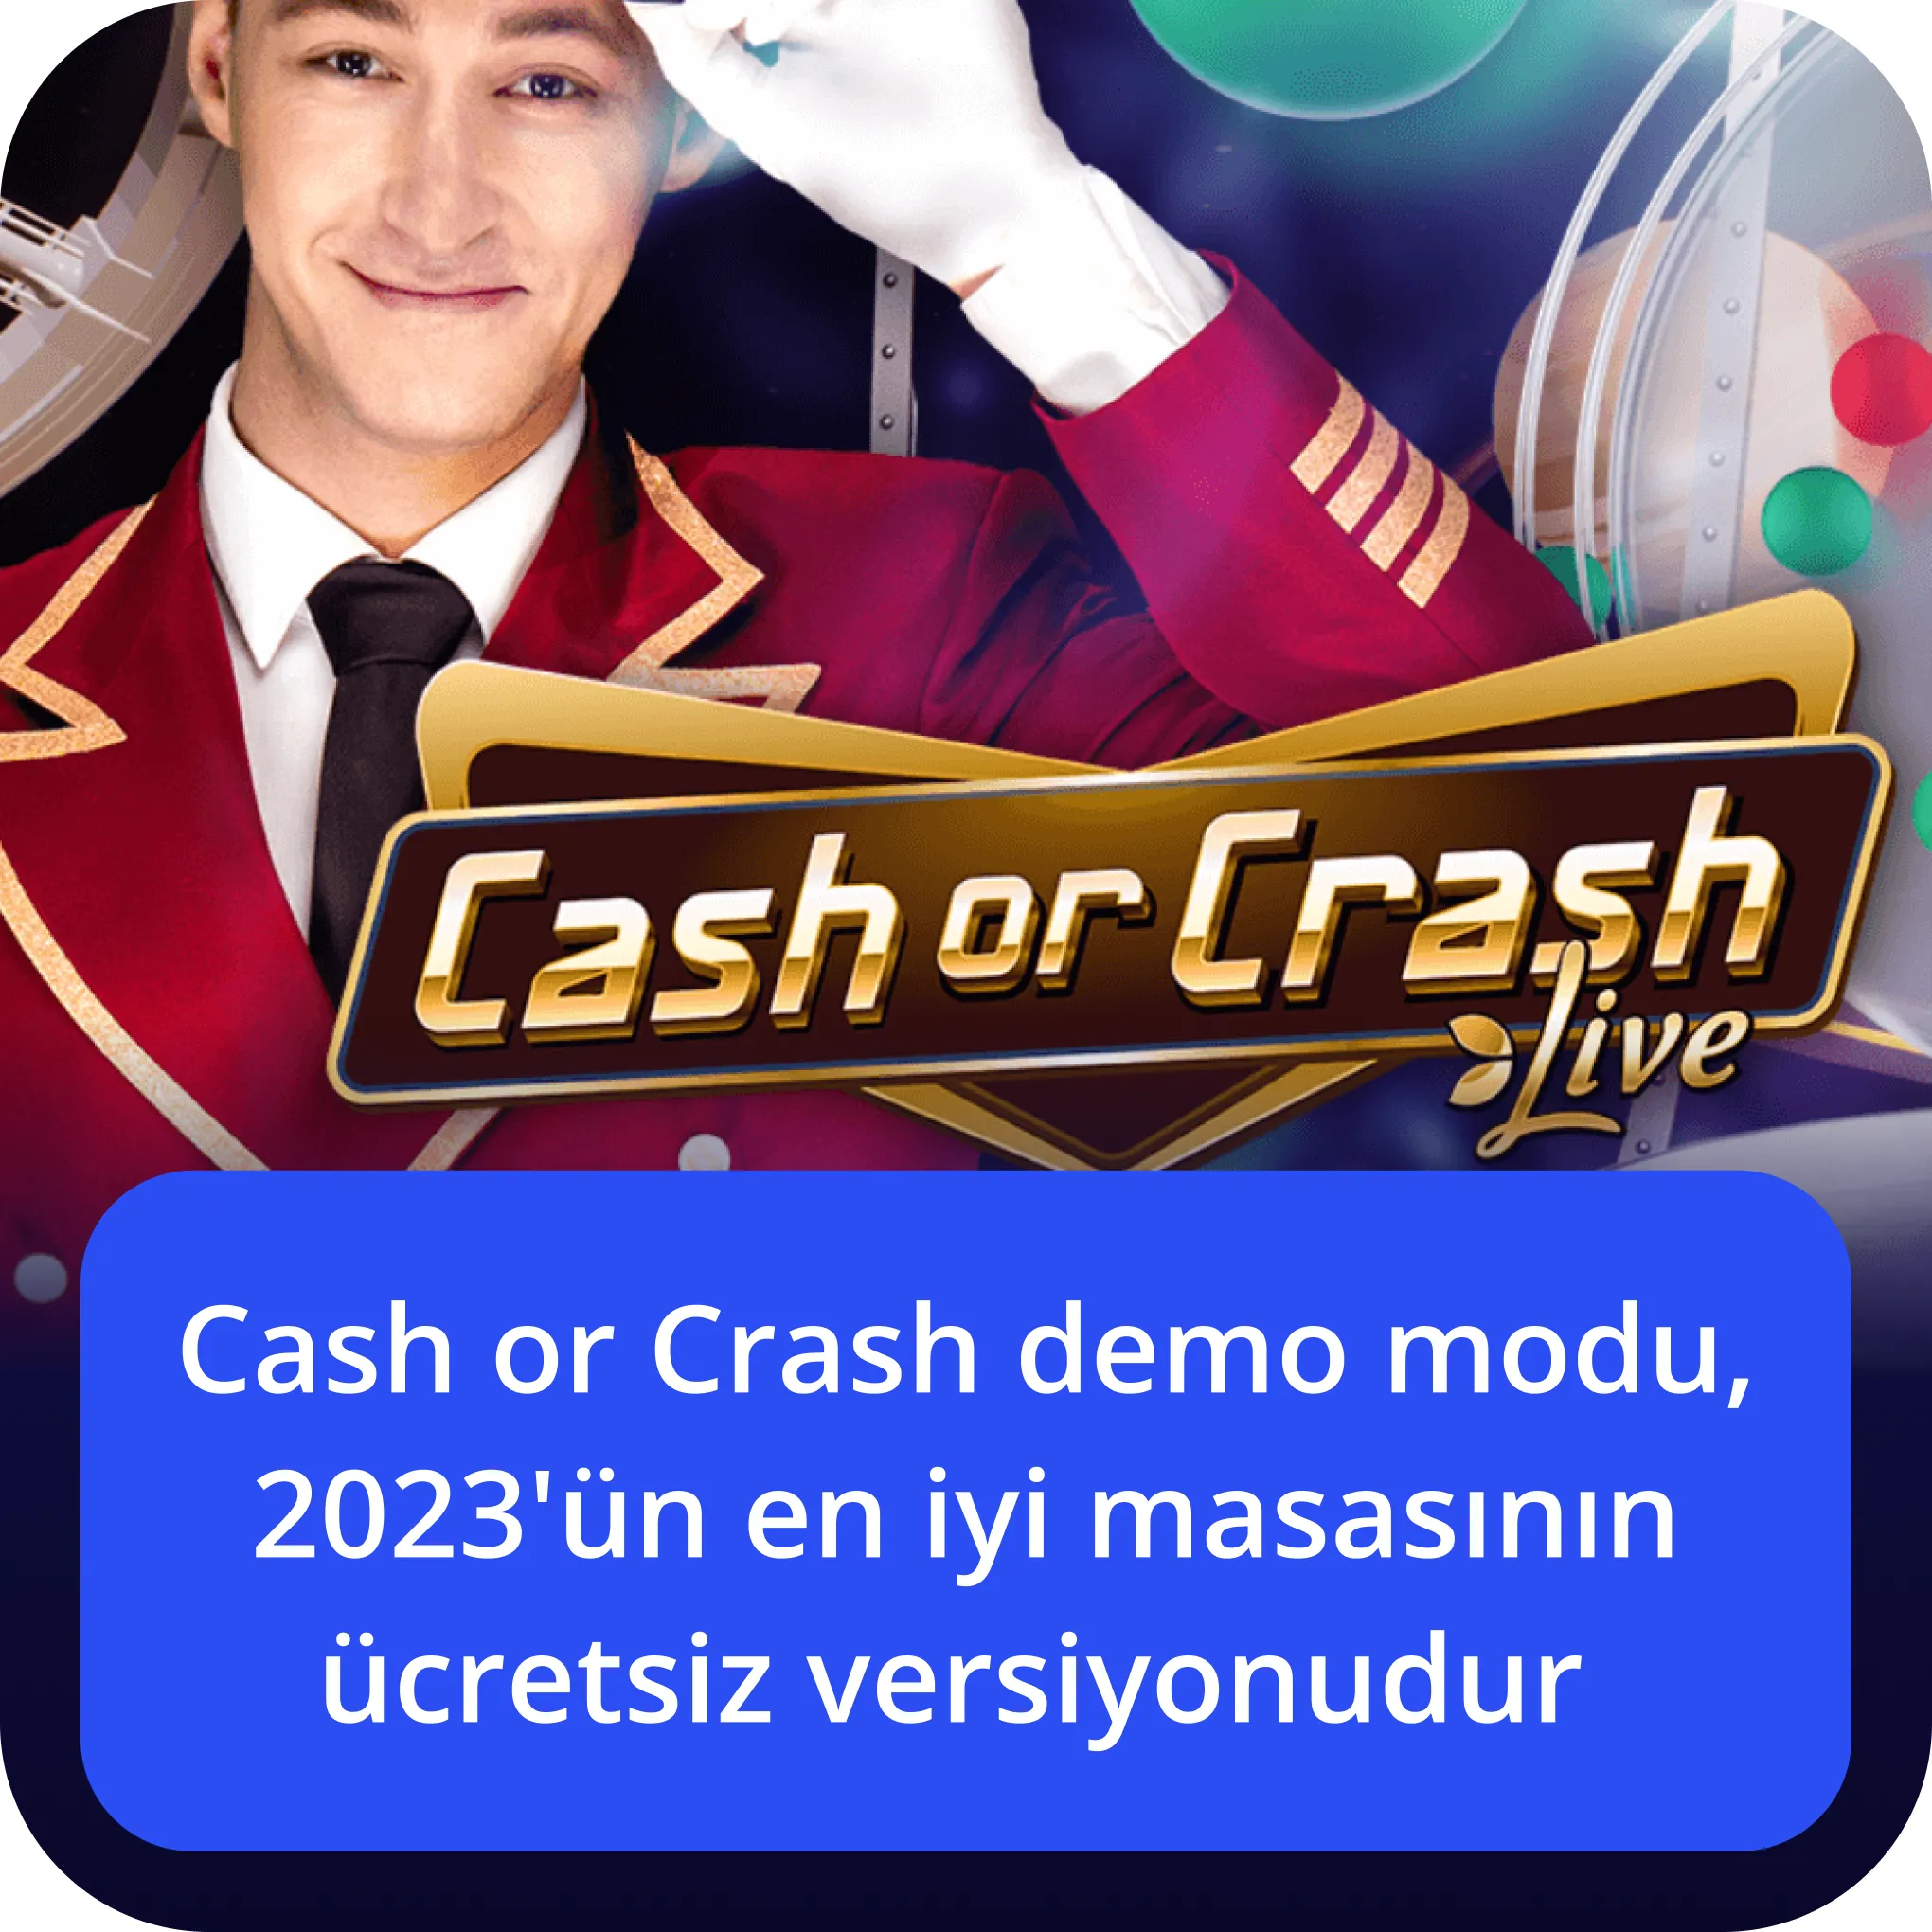 Cash or Crash incelemesi